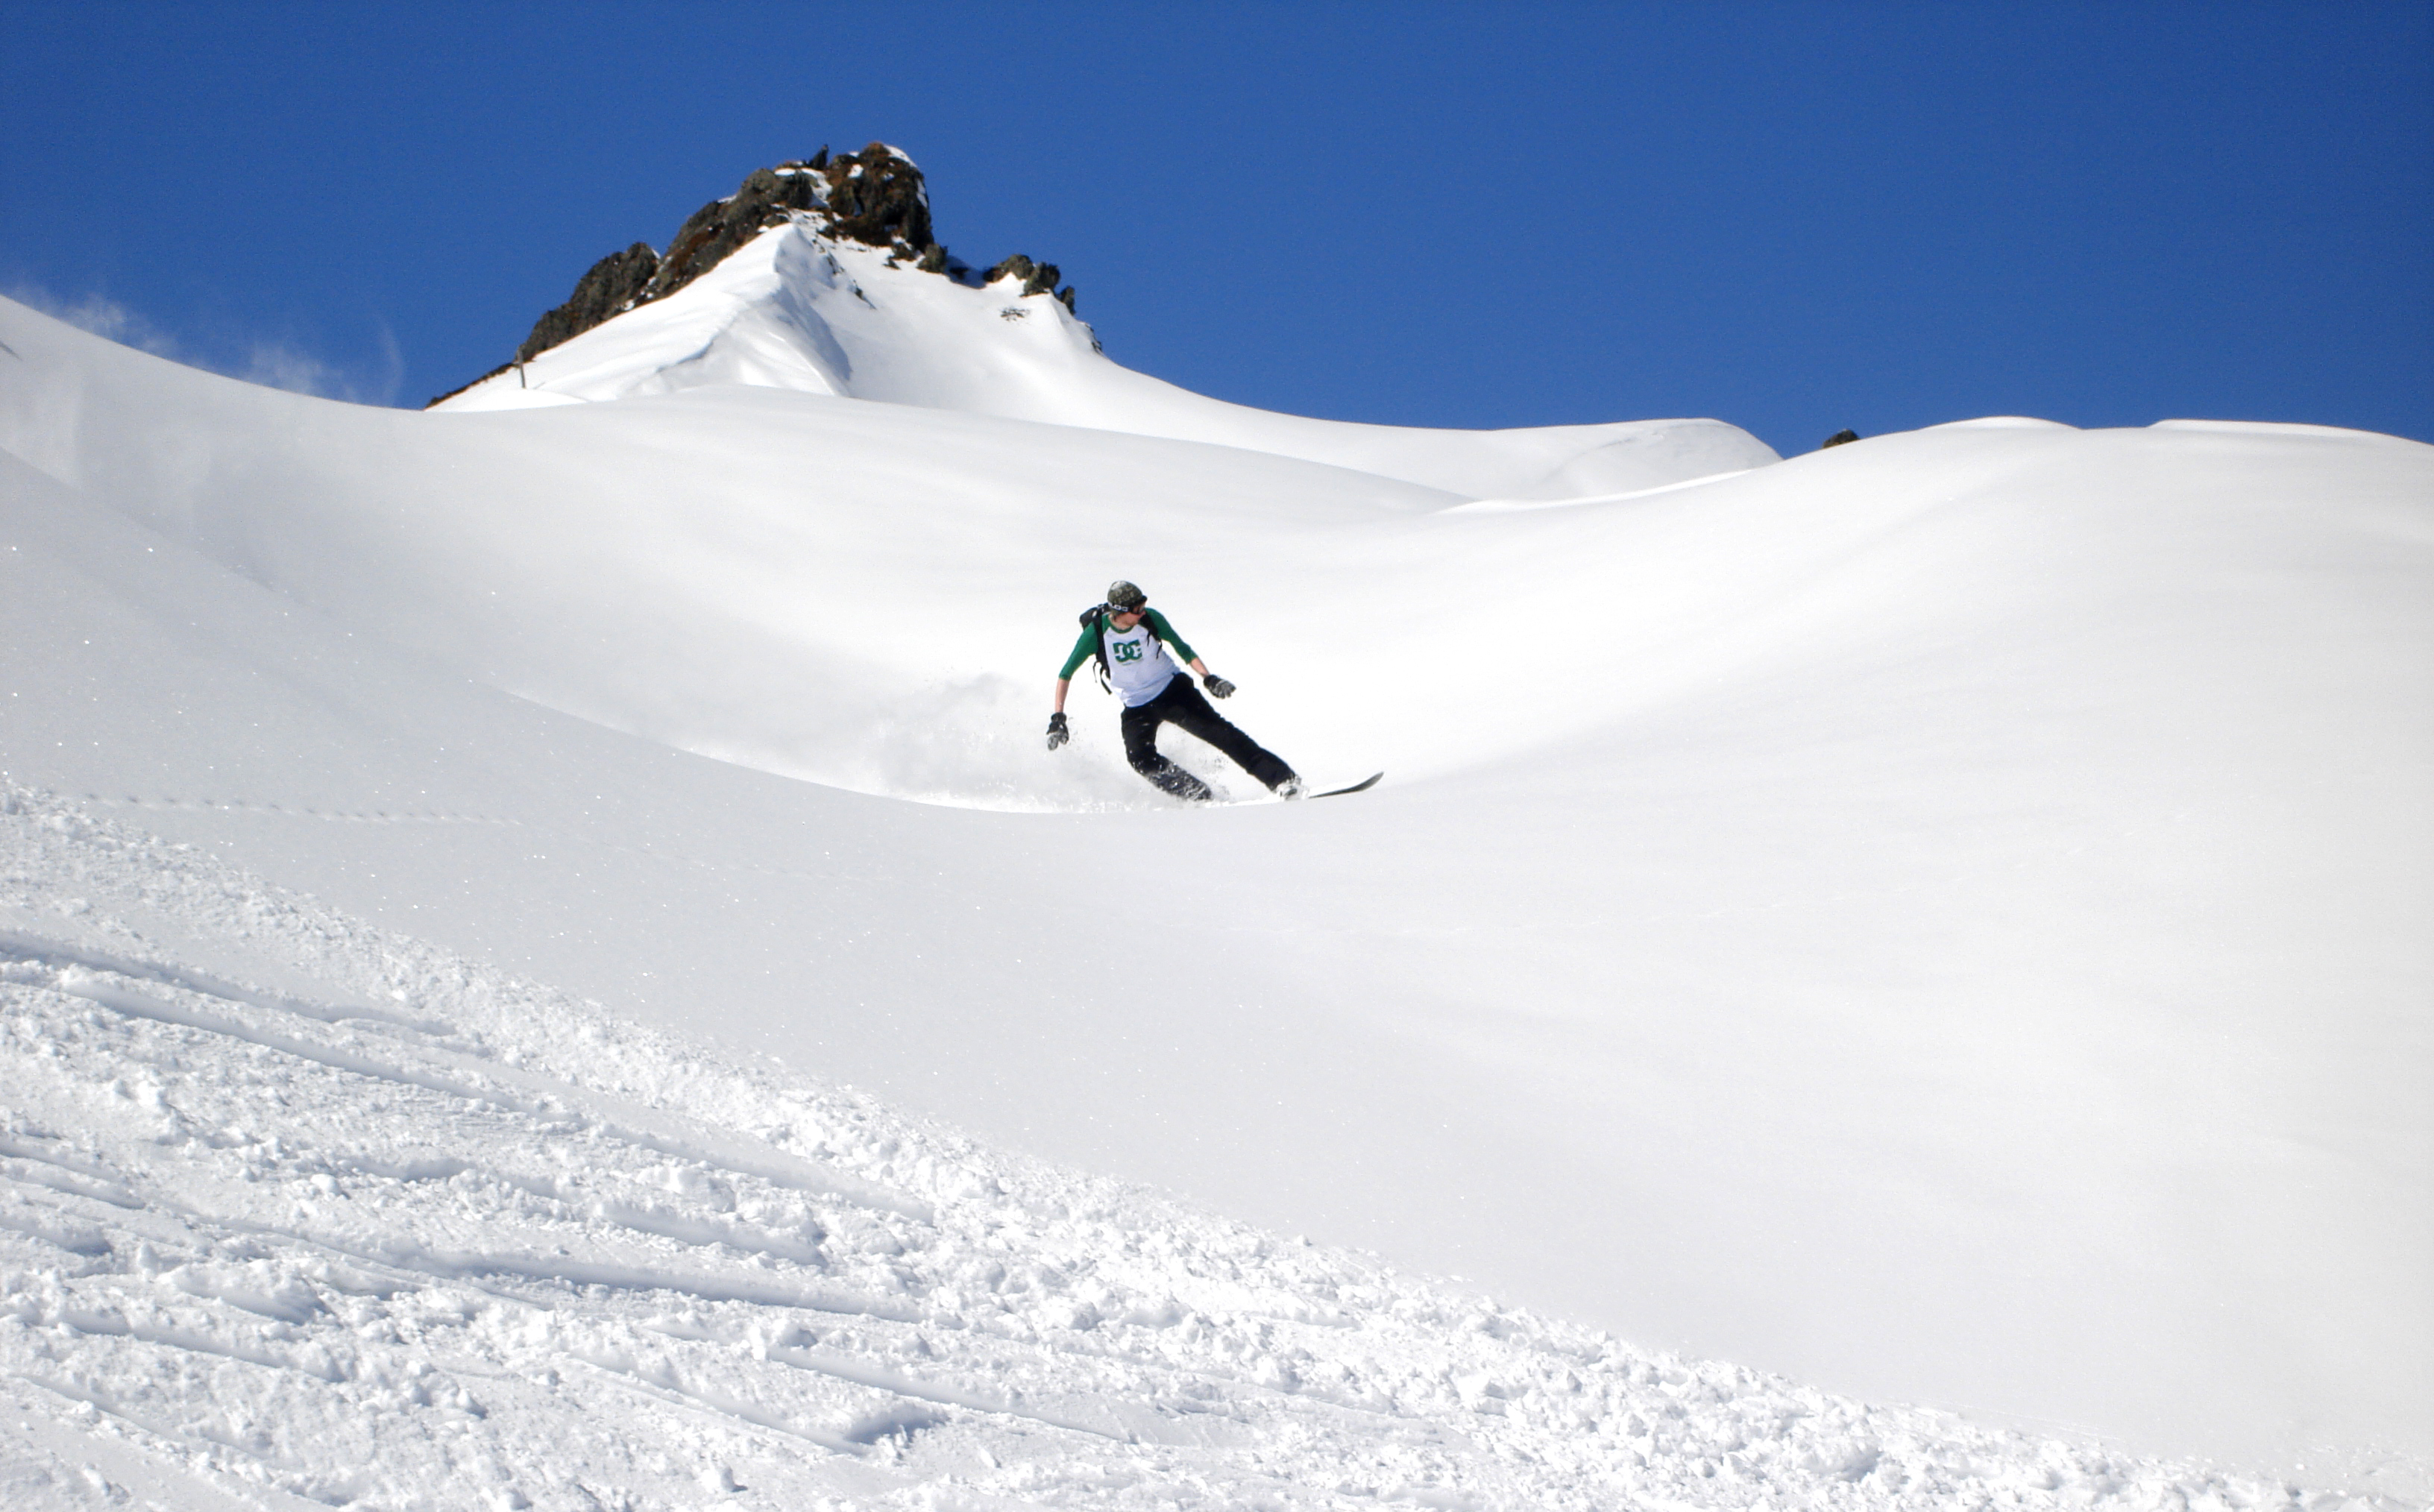 Snowboarding photo